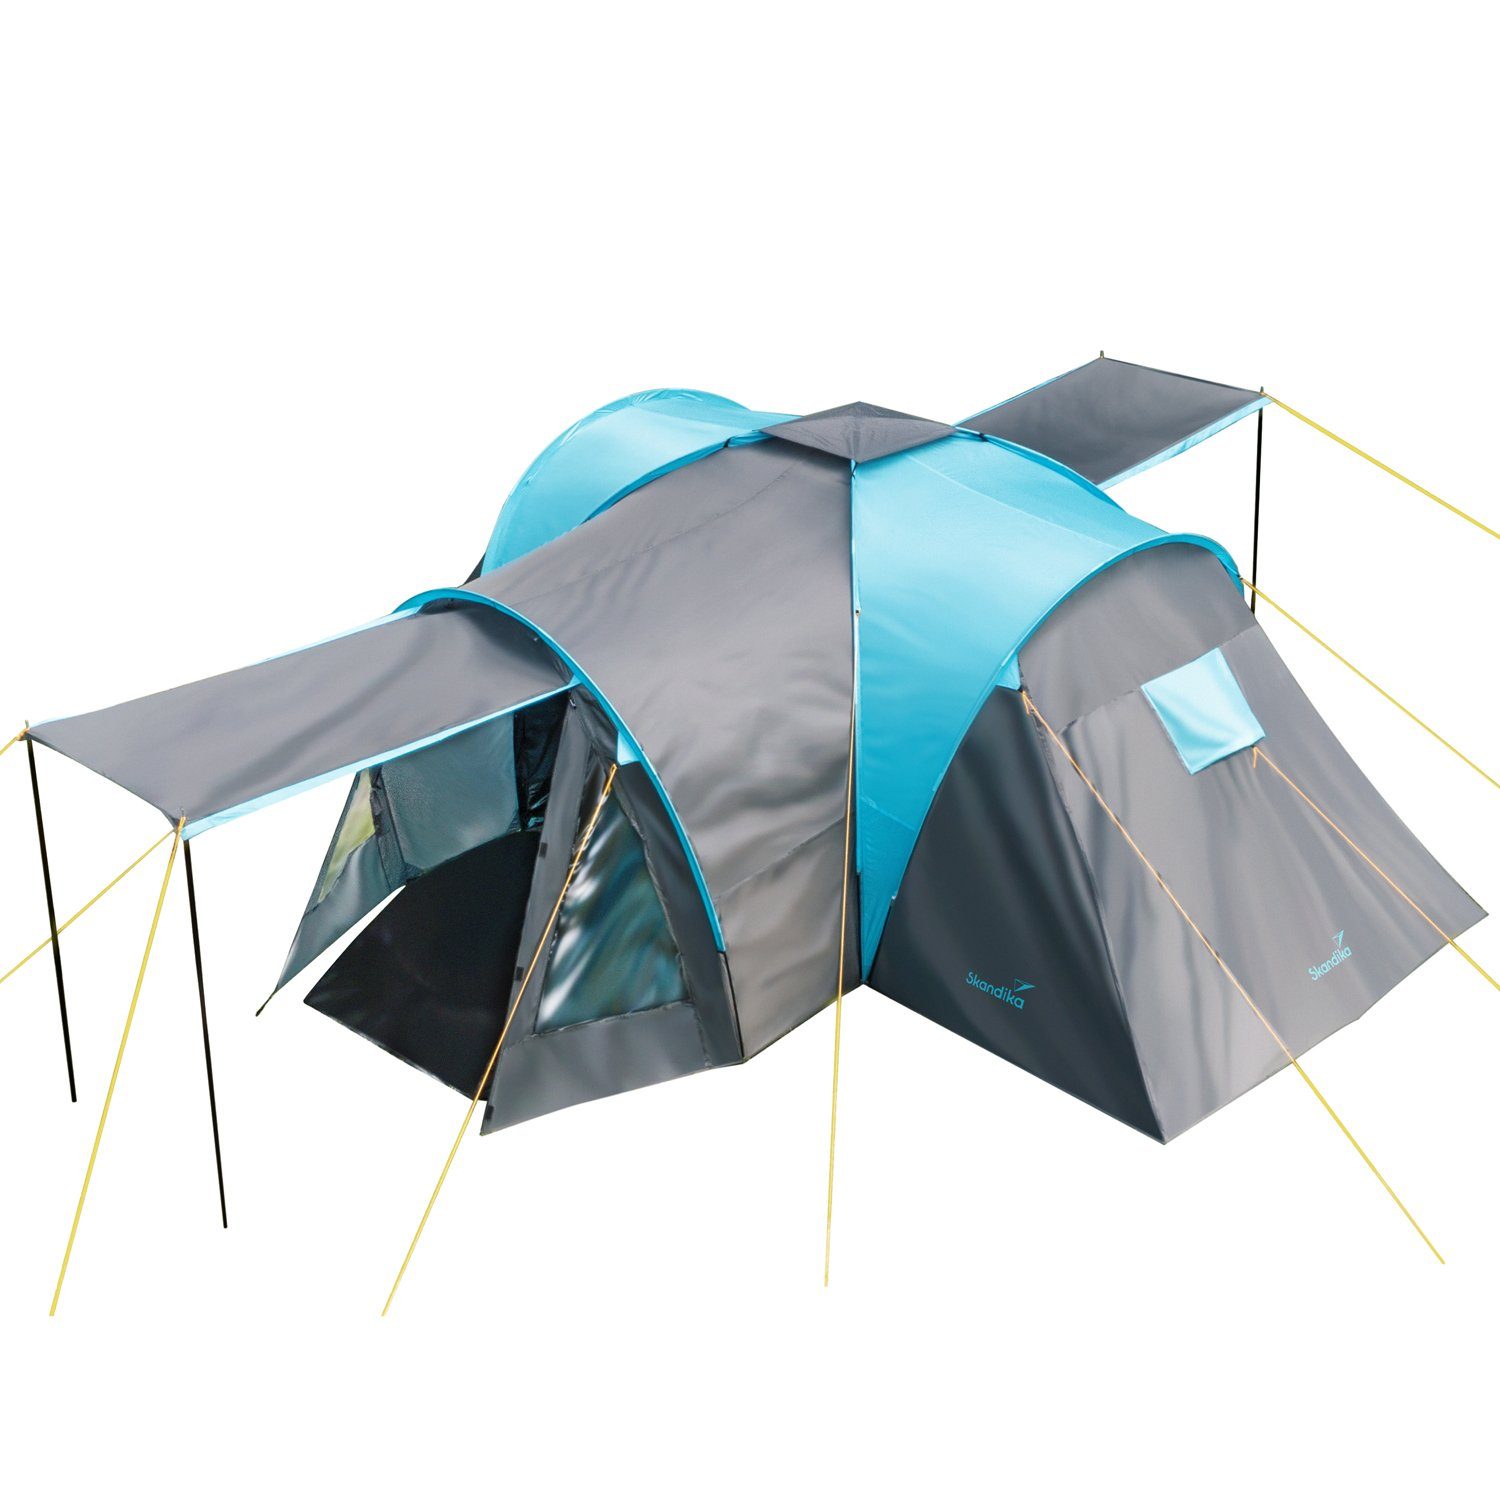 Igluzelt Kuppelzelt Zelt Campingzelt Outdoor Camping 4 Personen grün/grau 